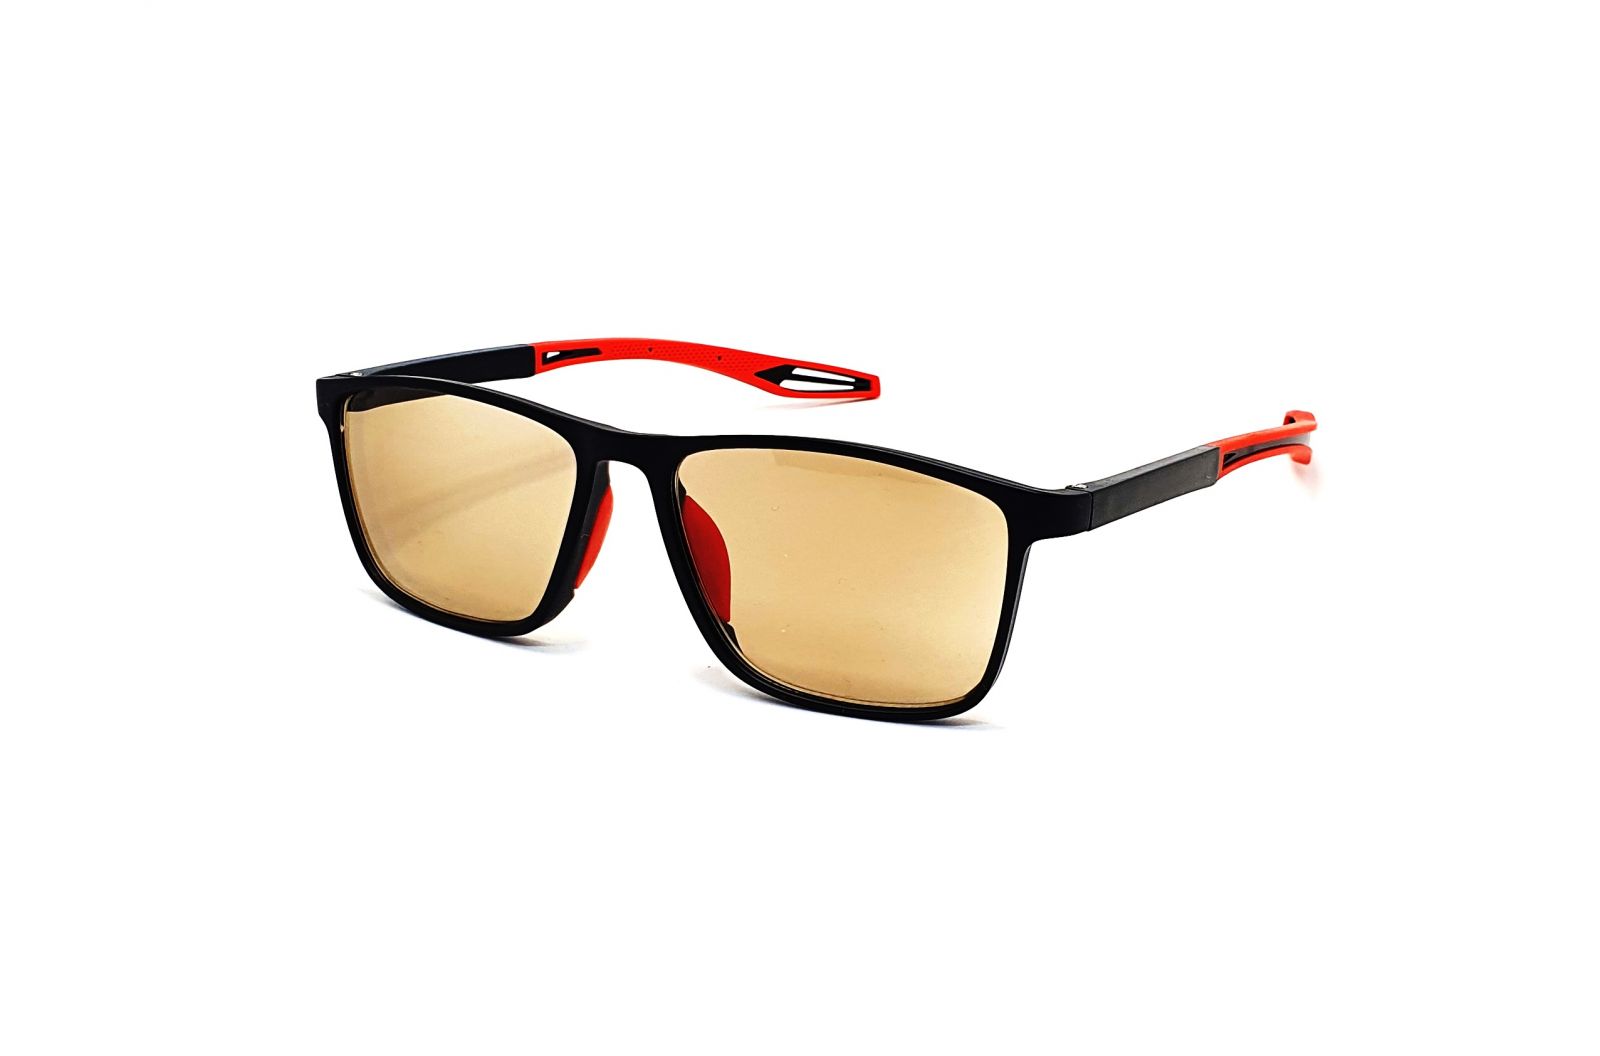 Samozabarvovací dioptrické brýle F04B / -2,00 black/red clear-brown